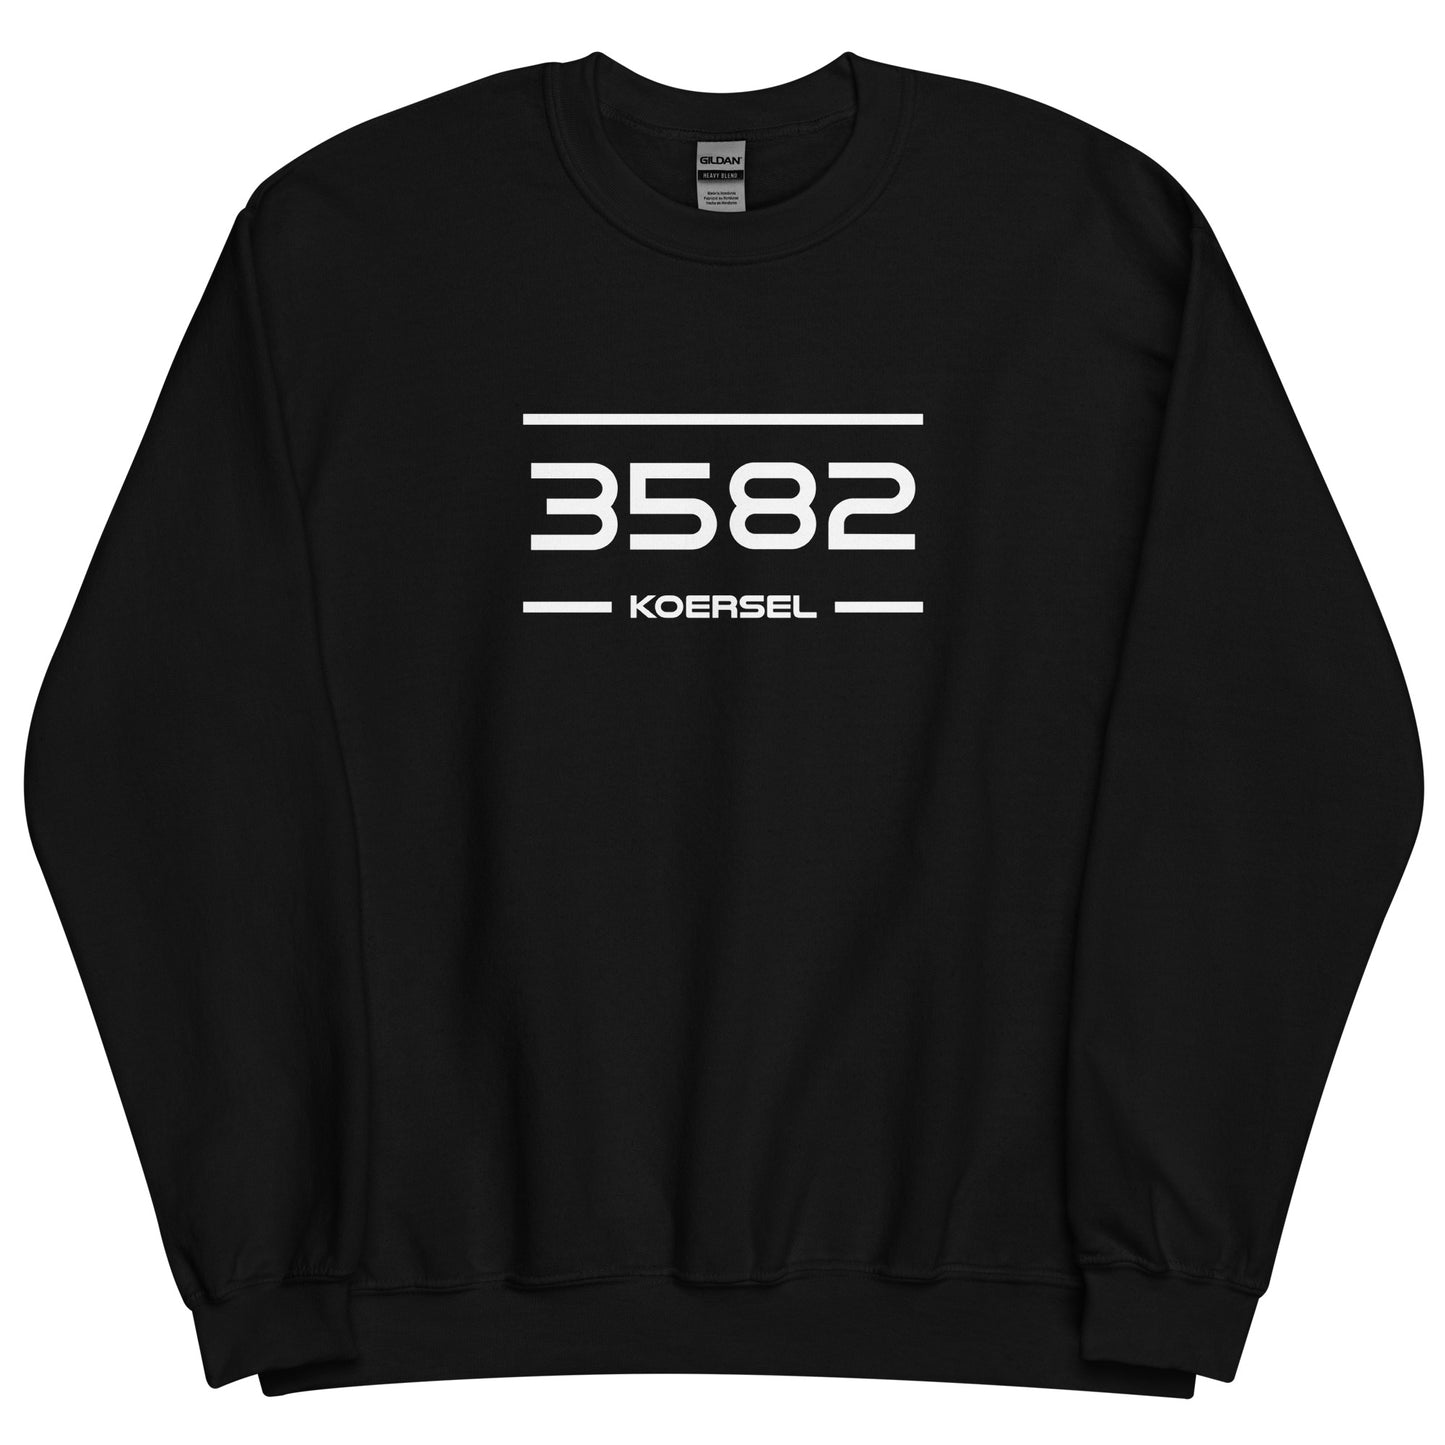 Sweater - 3582 - Koersel (M/V)